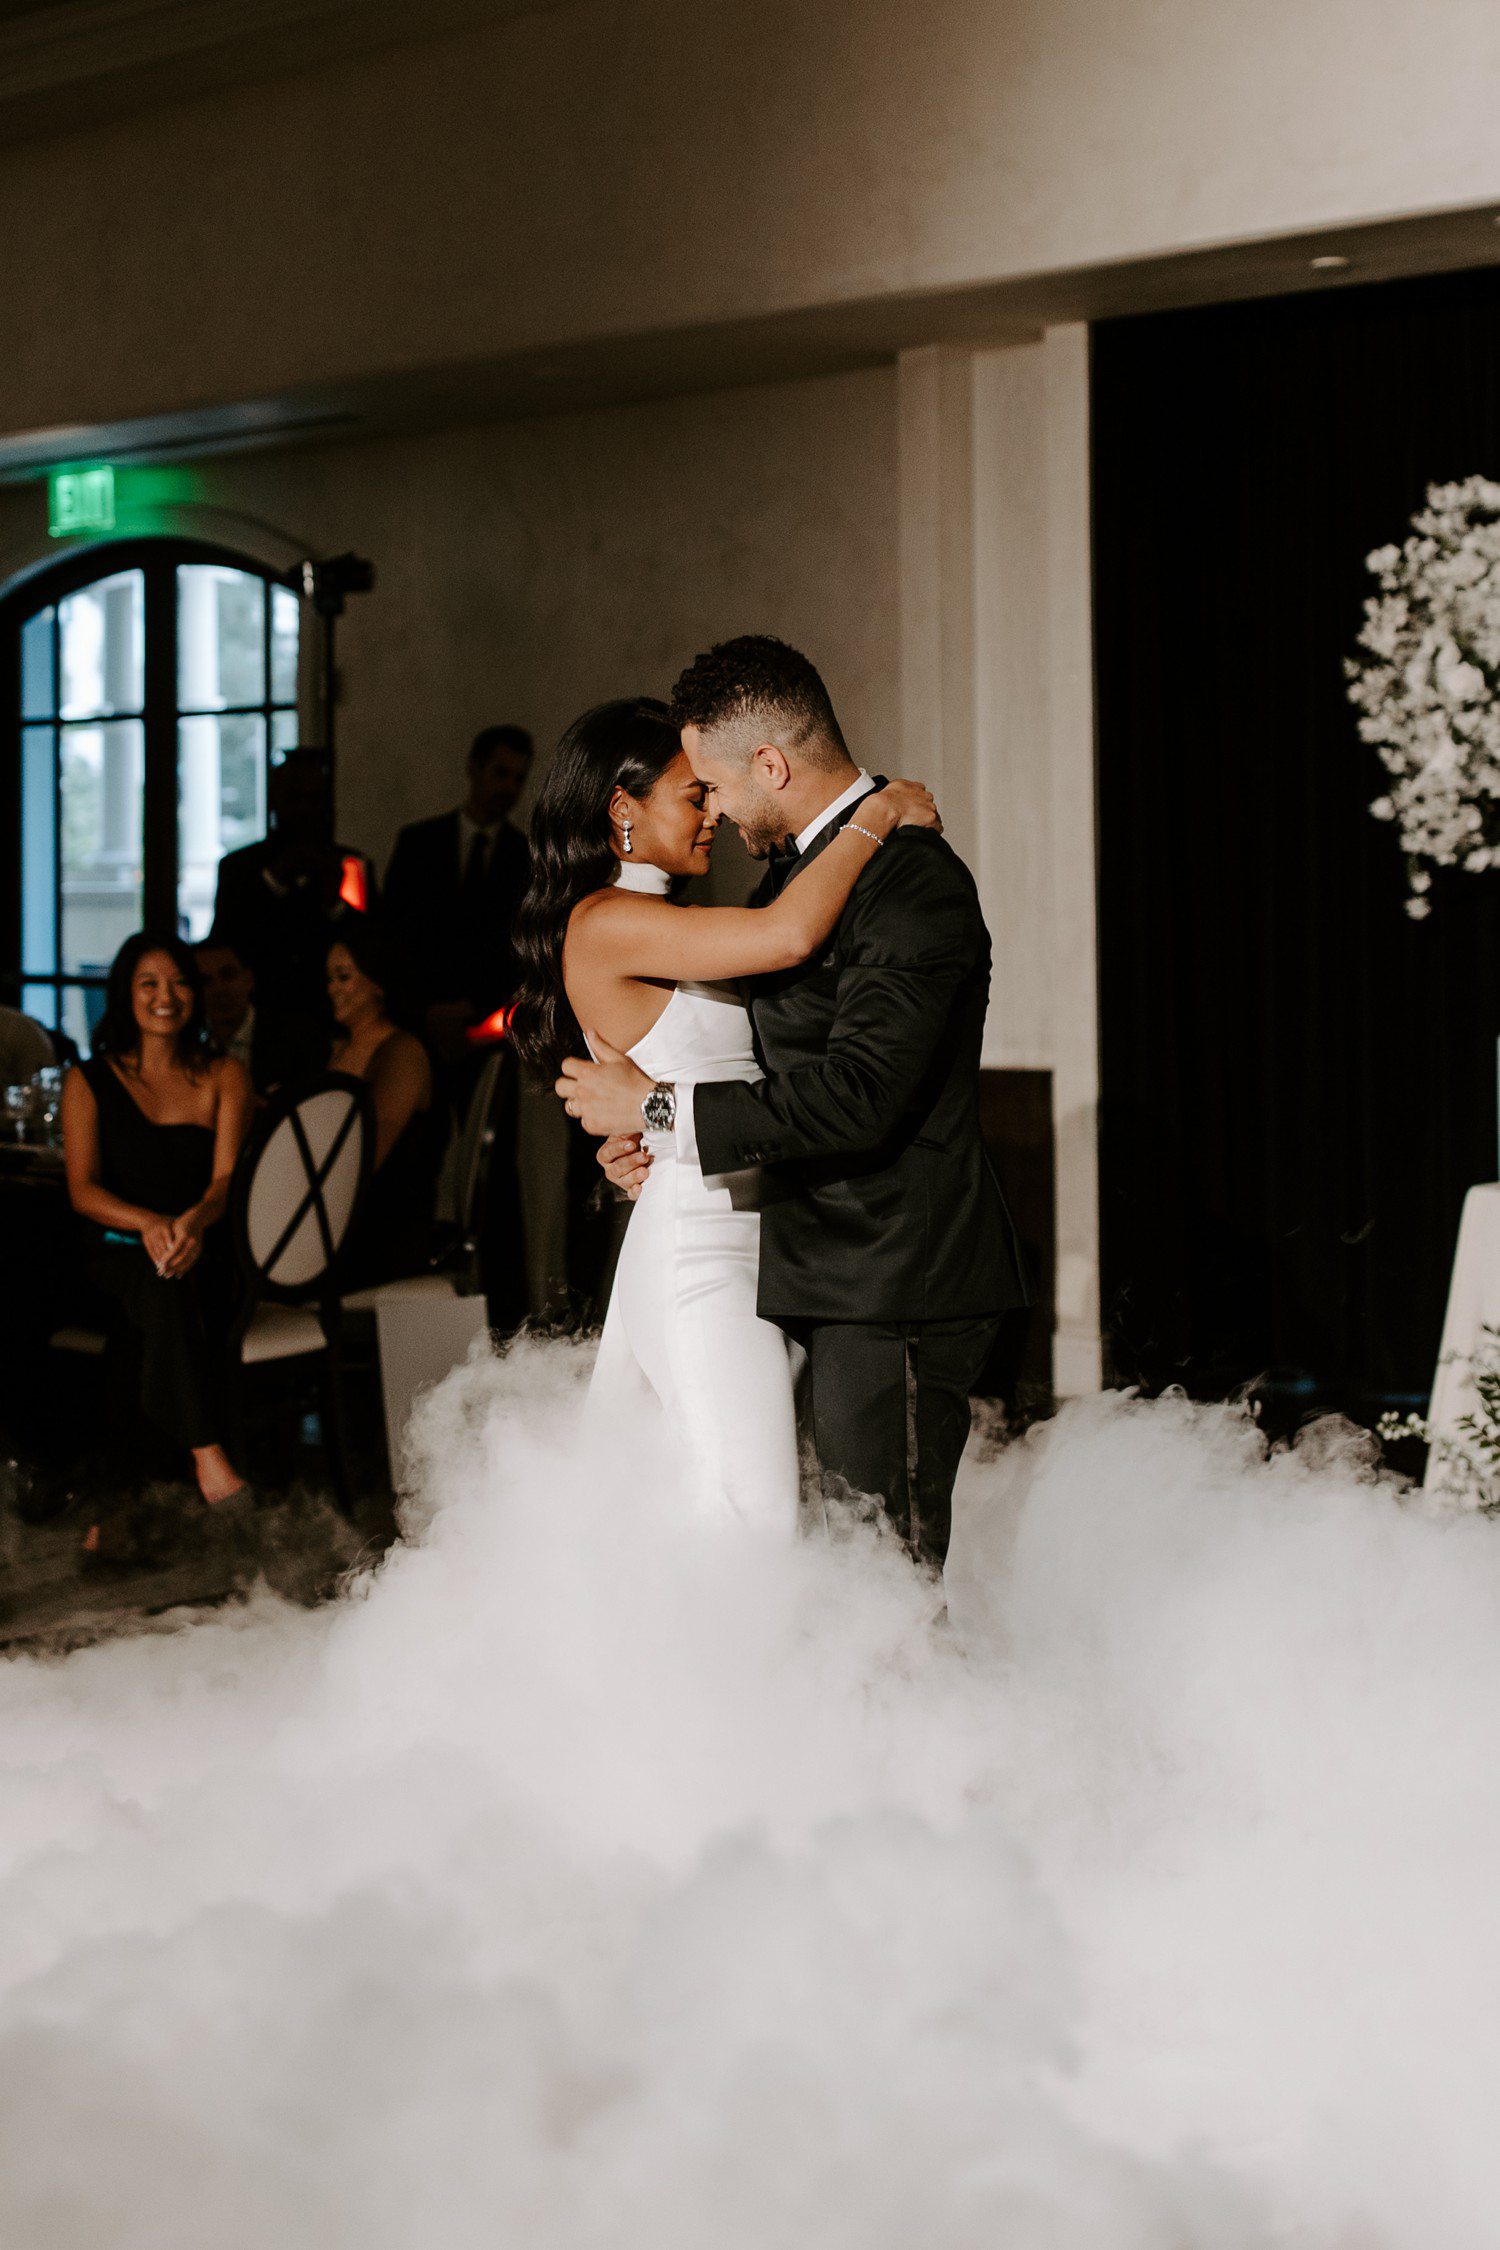 Wedding first dance with fog machine